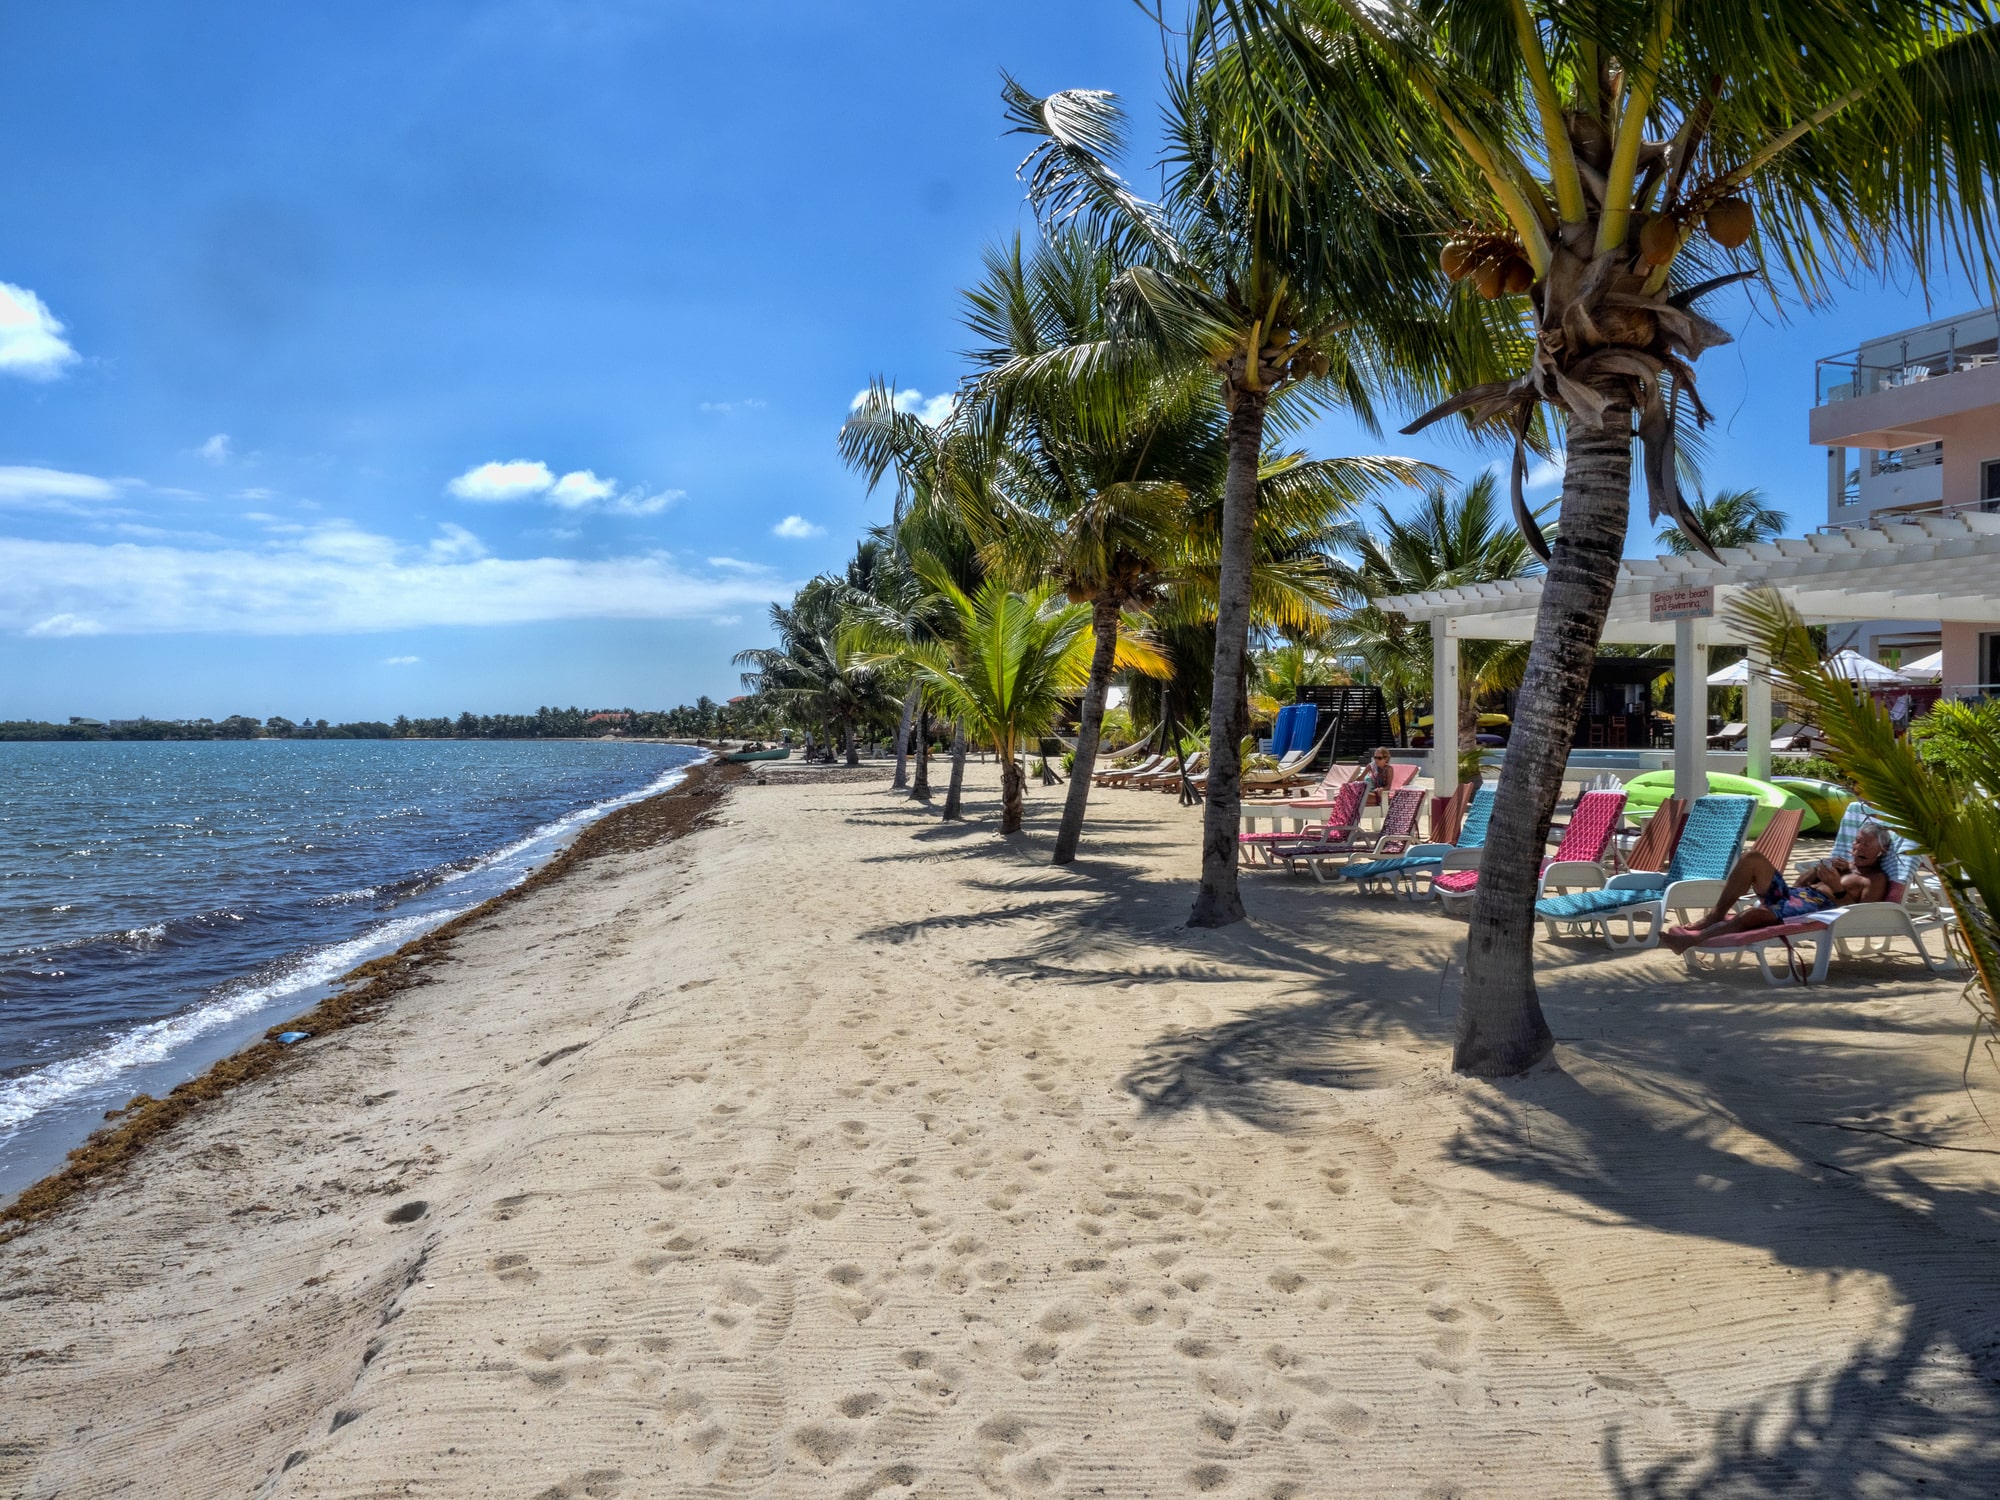 Beach in Placencia Caribbean Sea, Belize